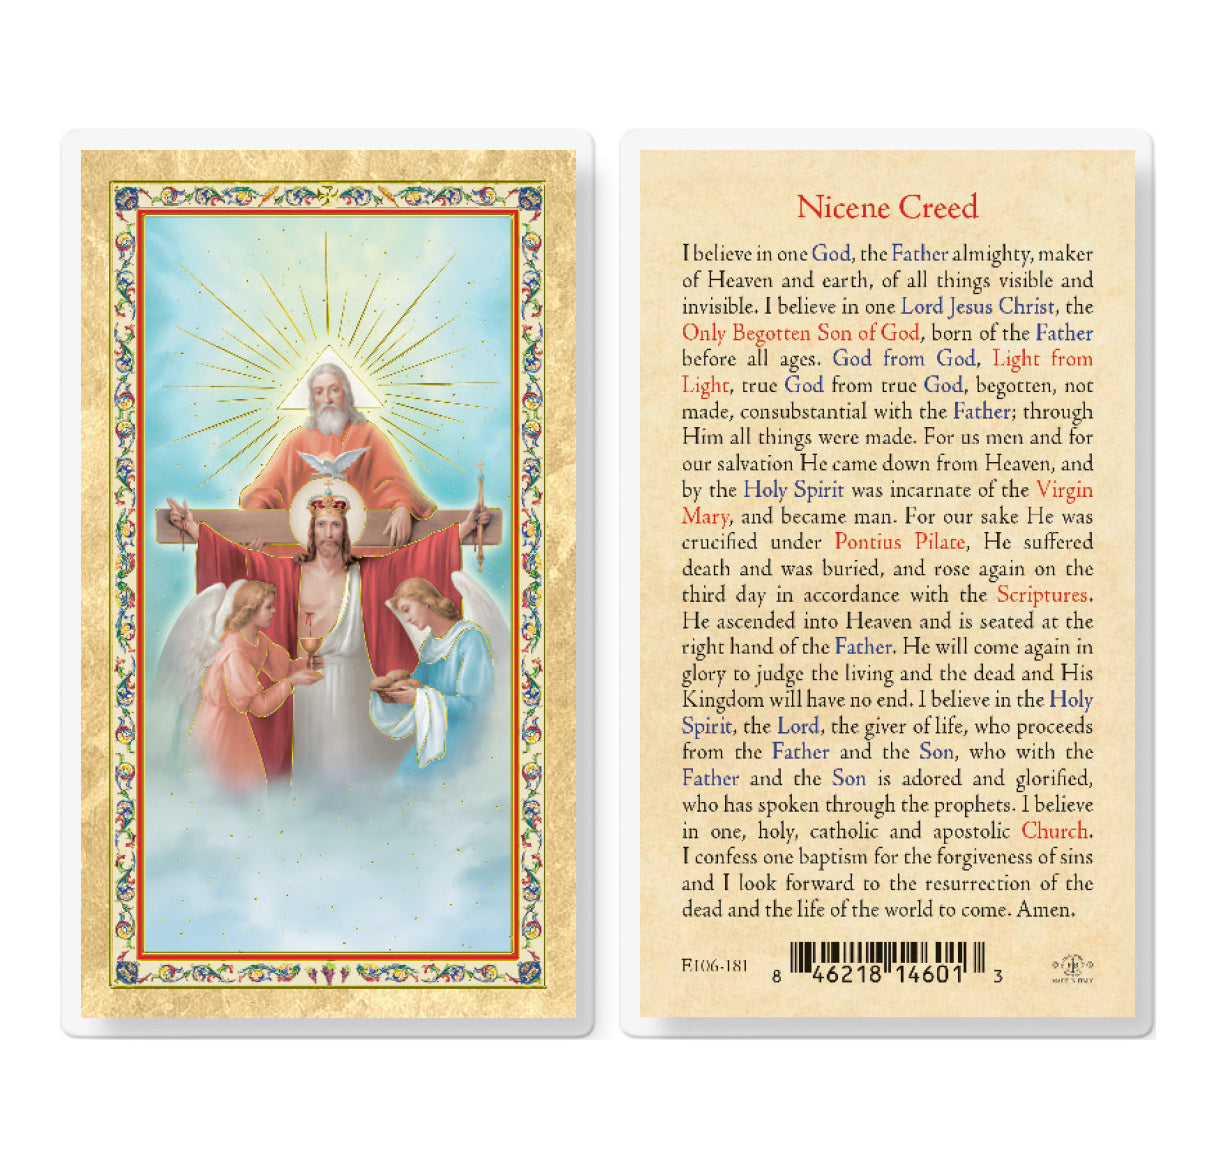 Nicene Creed Gold-Stamped Laminated Catholic Prayer Holy Card with Prayer on Back, Pack of 25